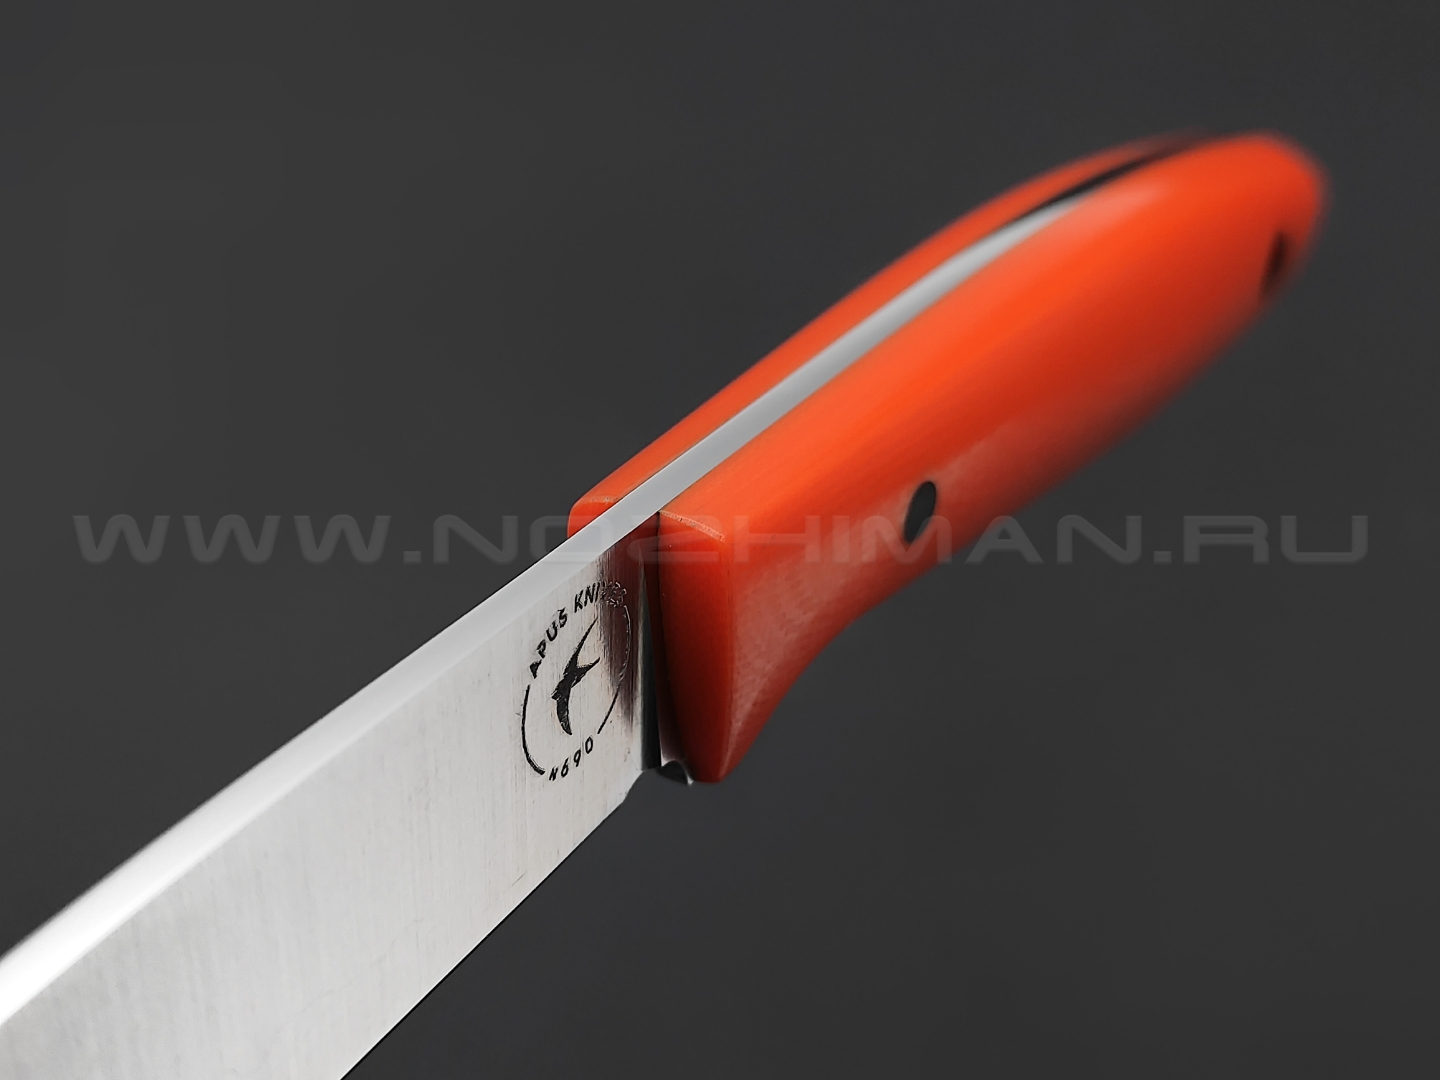 Apus Knives нож Toothpick сталь N690, рукоять G10 orange